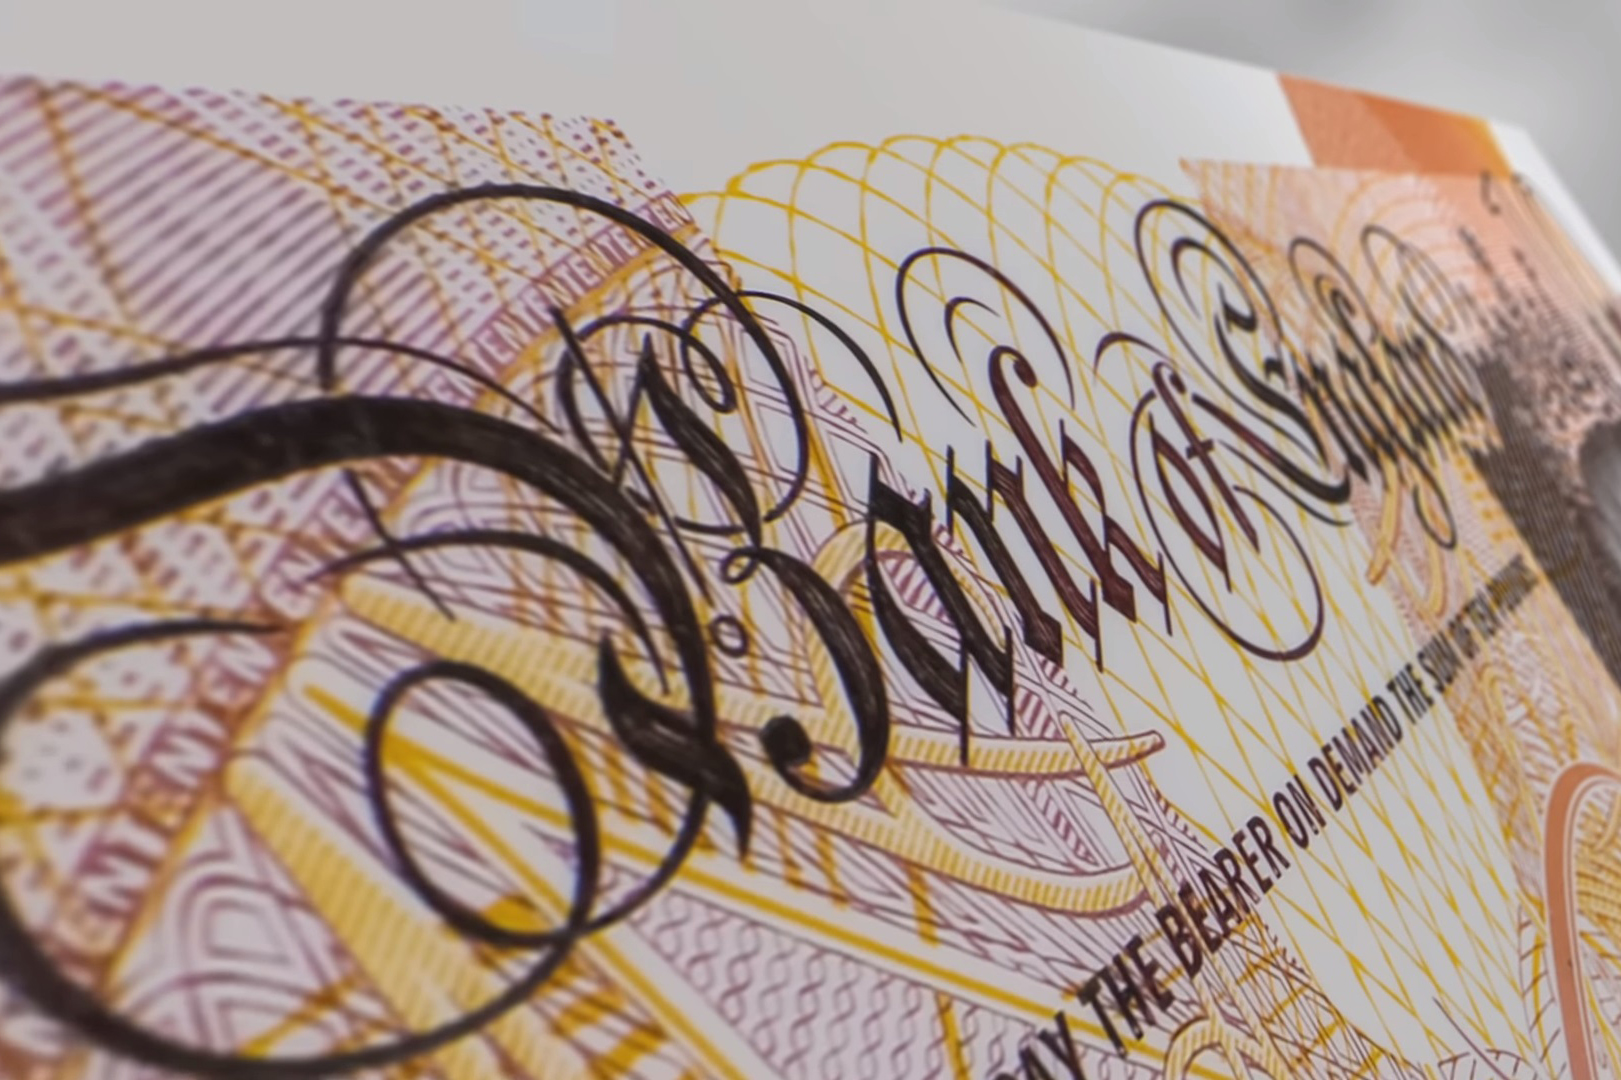 Buy Fake 10 British Pounds Banknotes Online